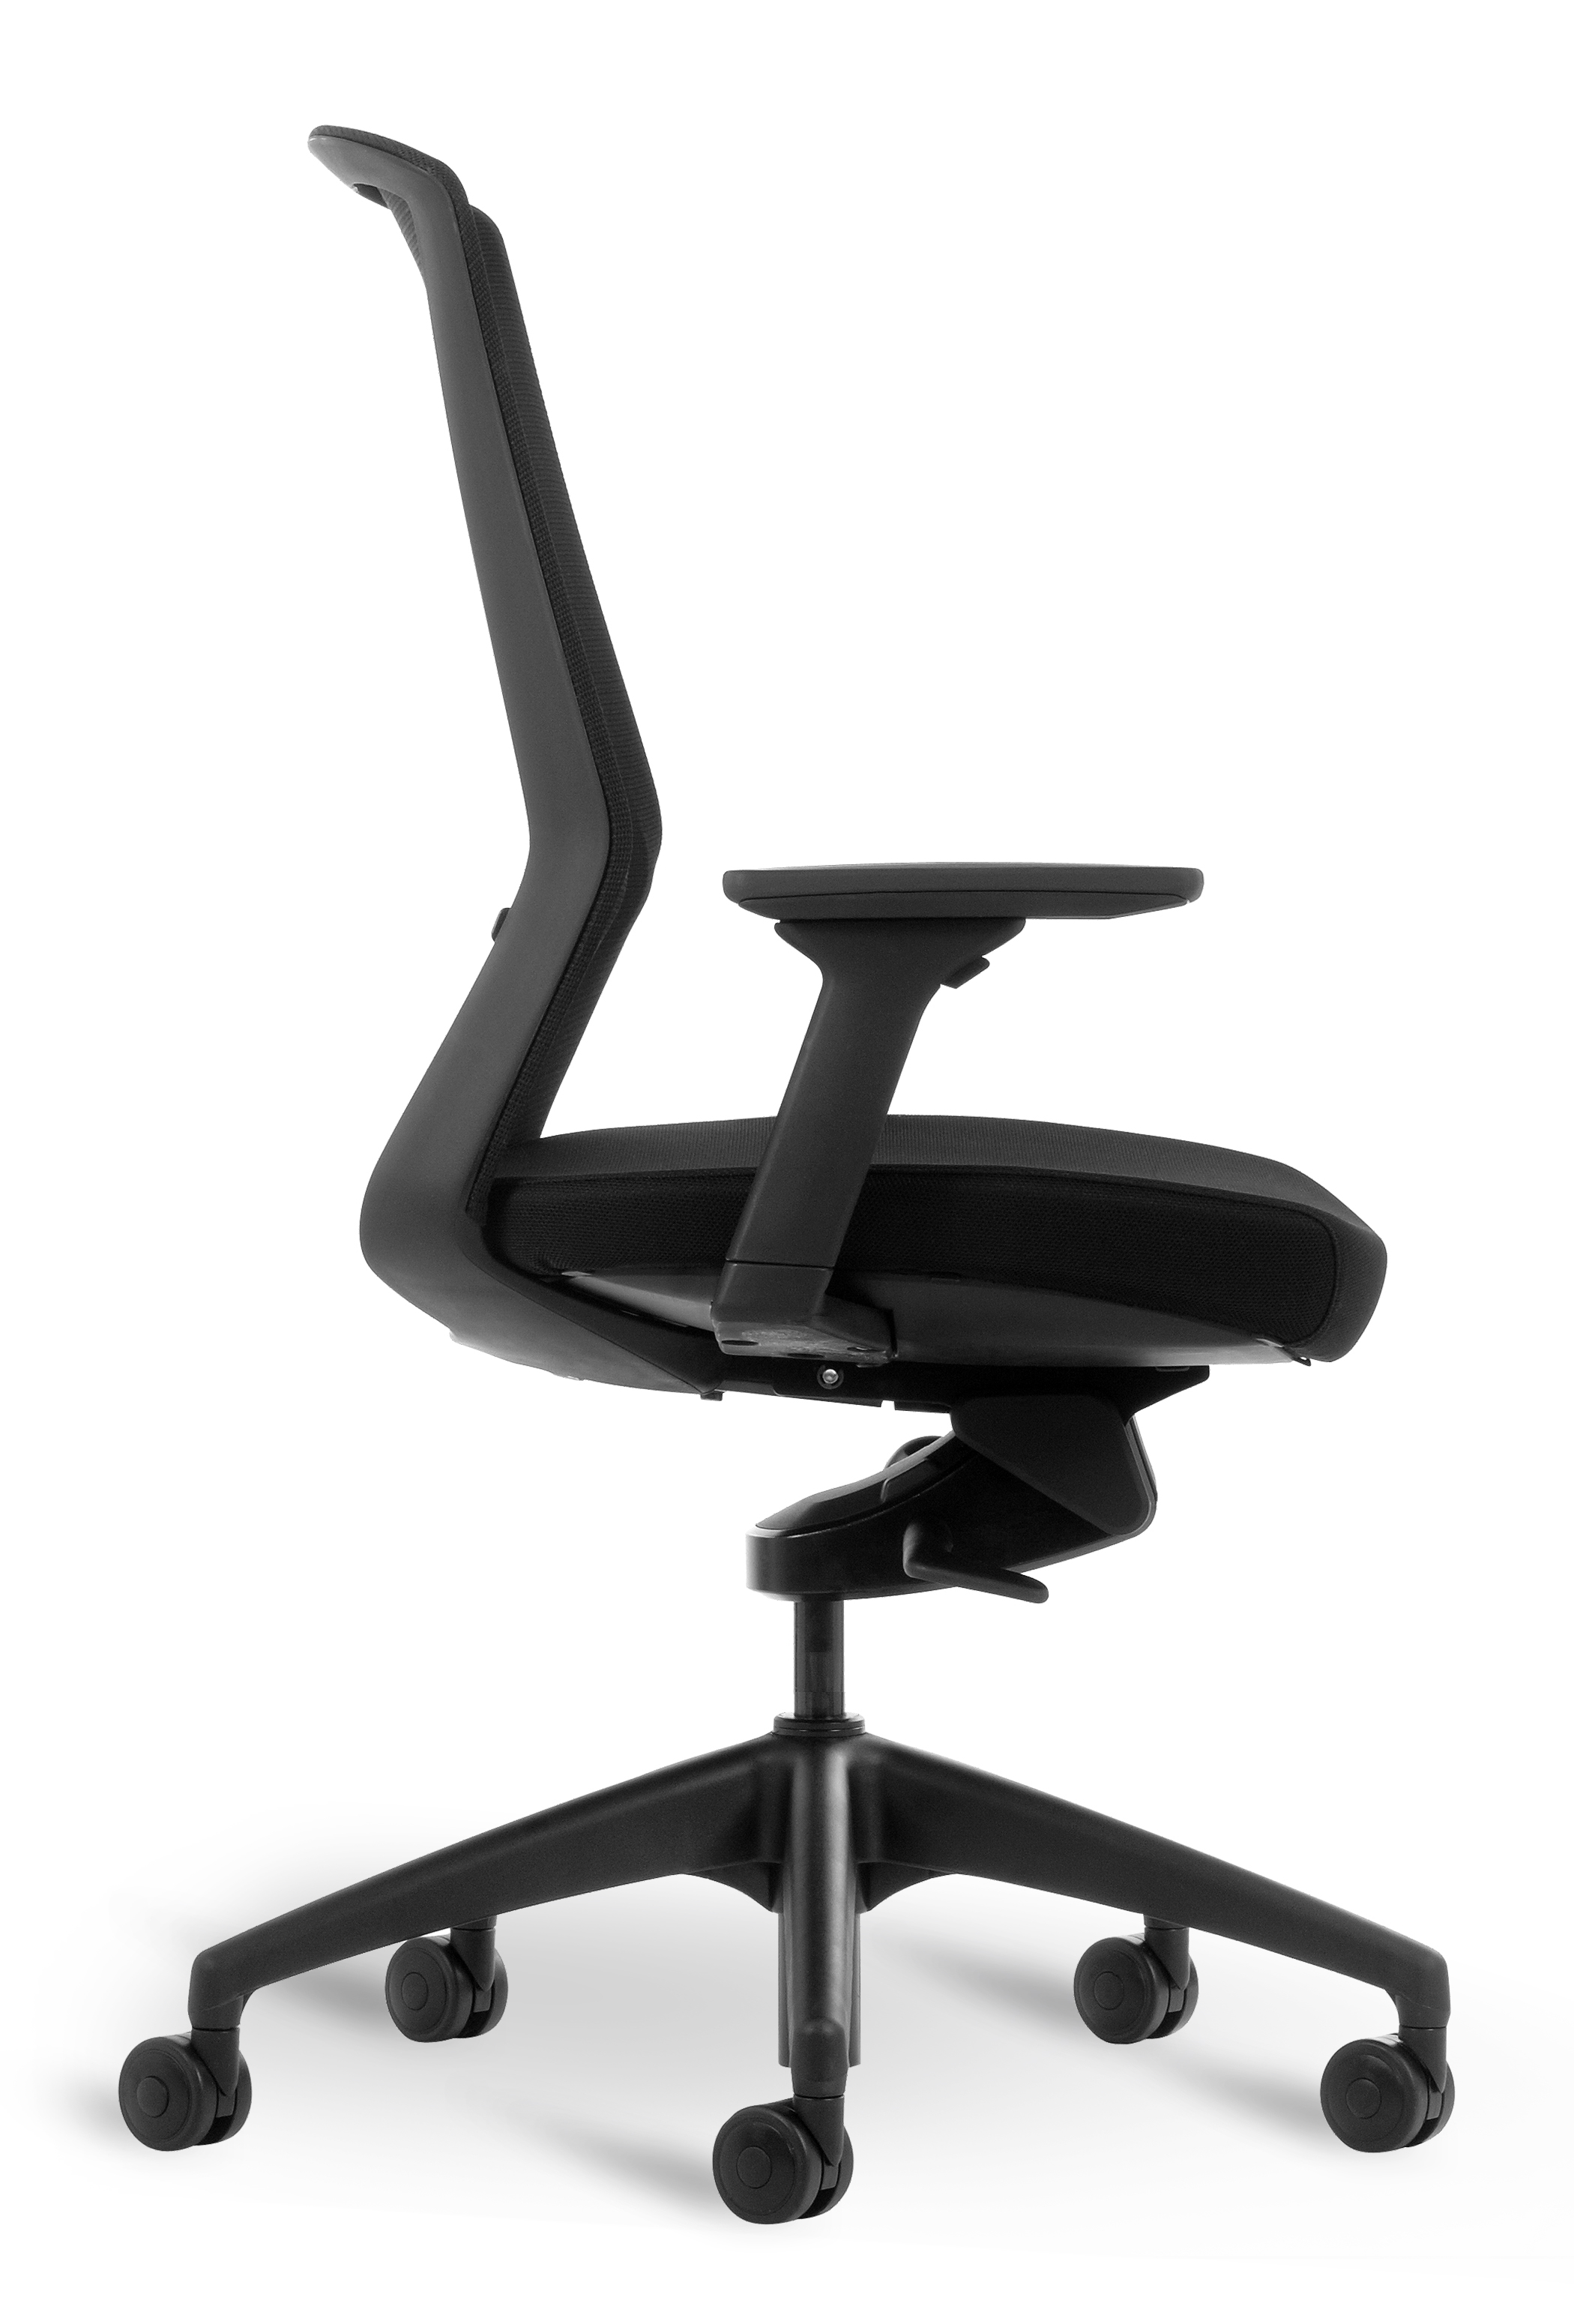 WS - J1 task chair - Black, black base (Side)